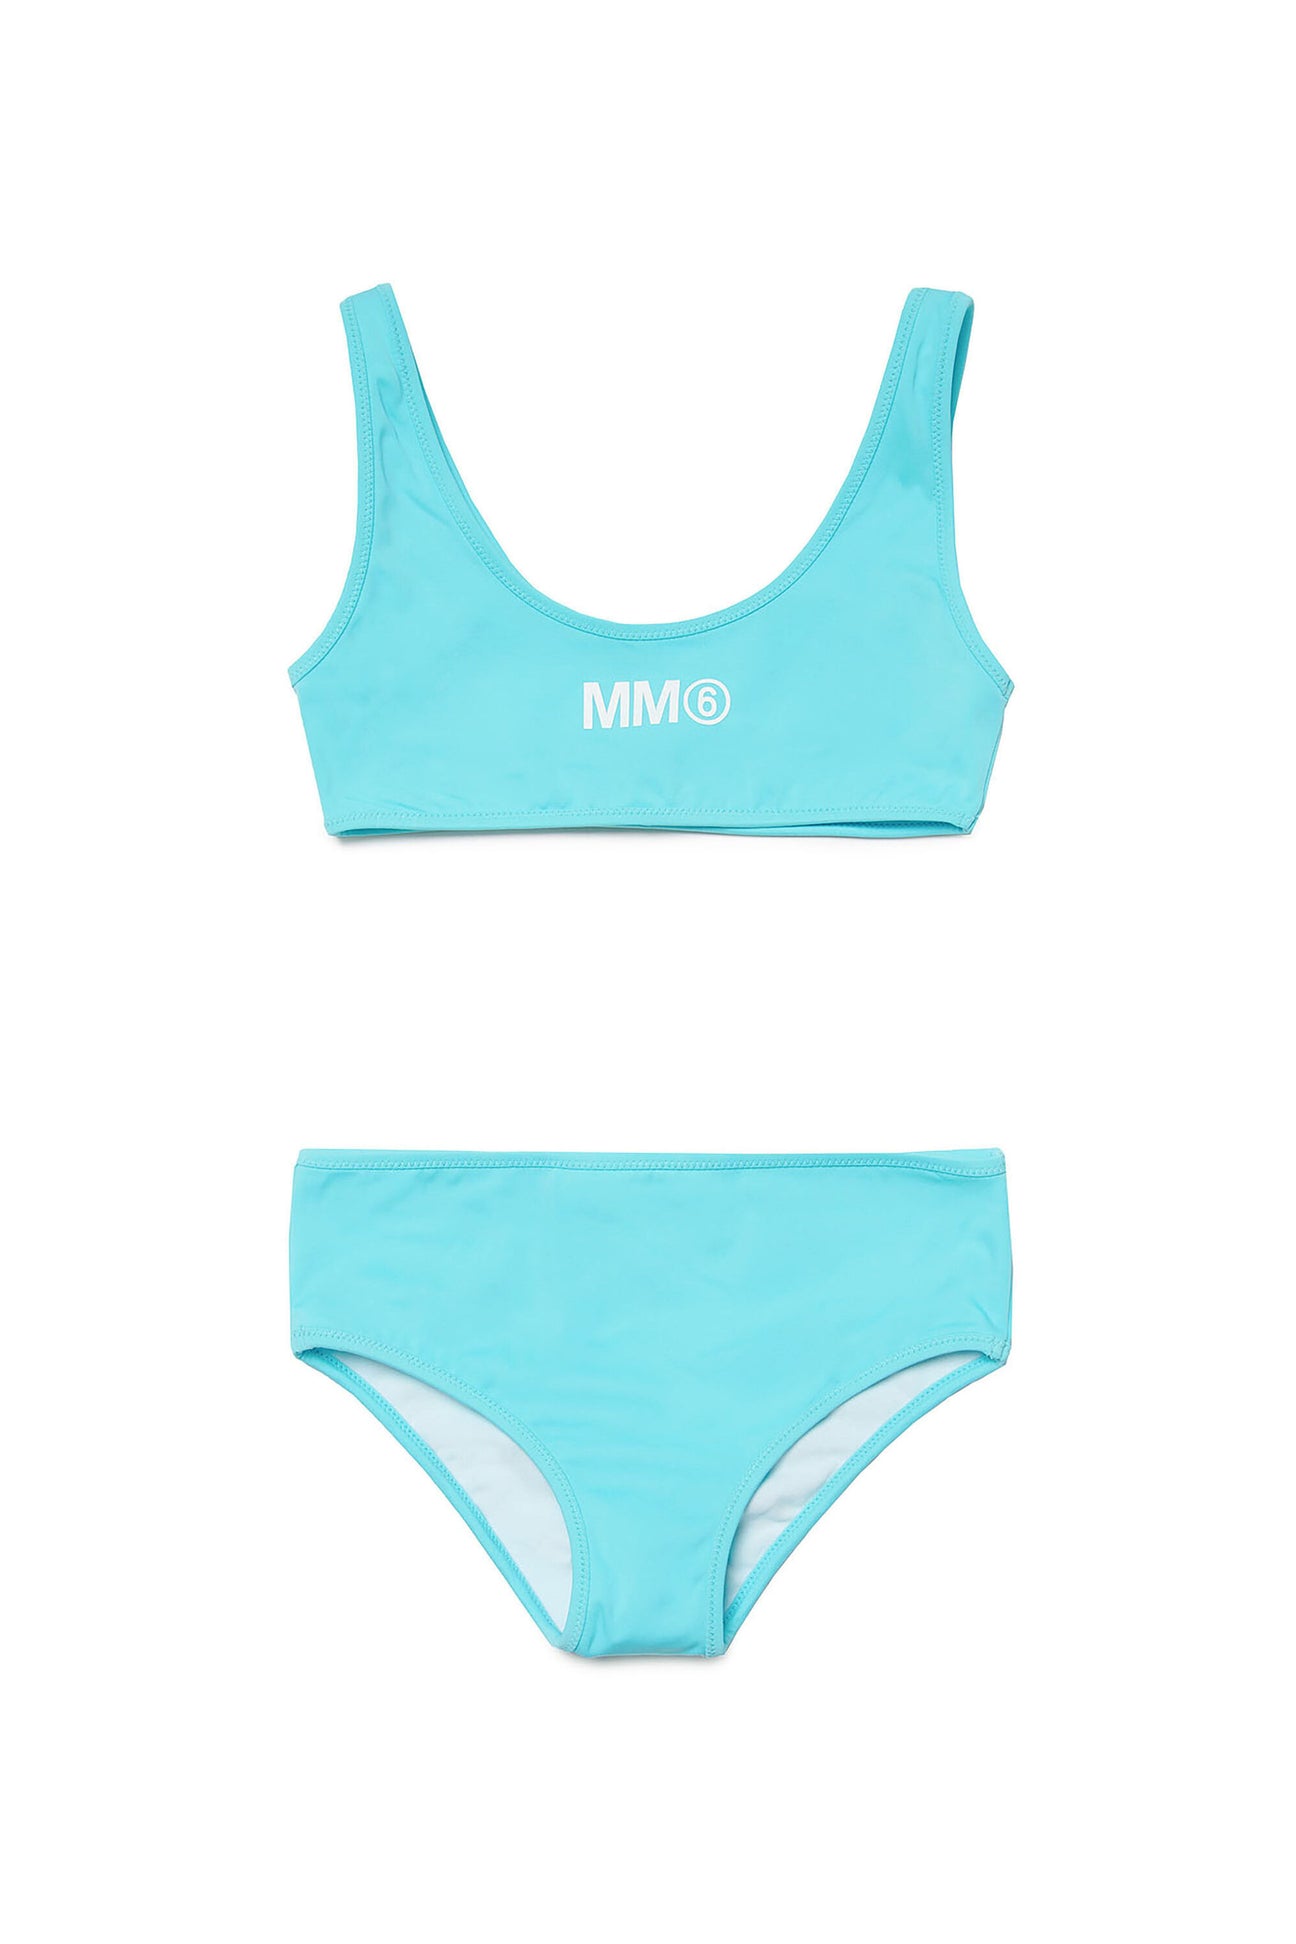 Costume bikini in lycra con logo MM6 